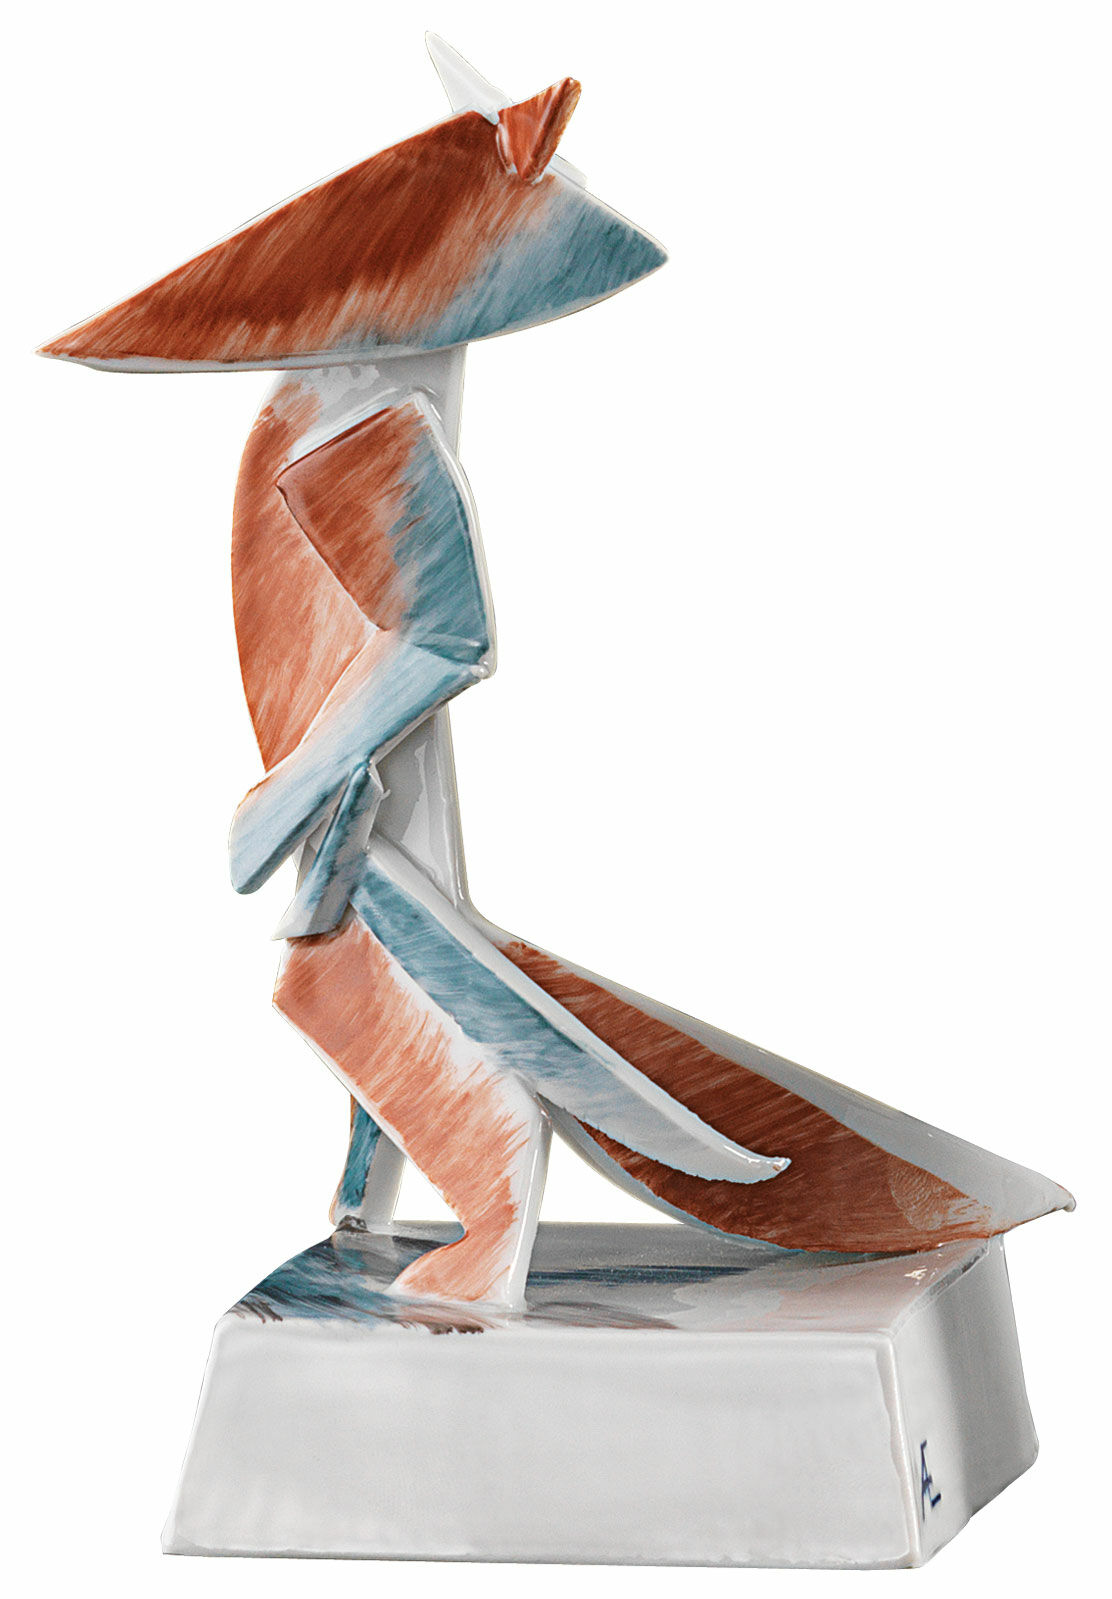 Porcelain sculpture "Reynard the Fox" - after Goethe by Andreas Ehret